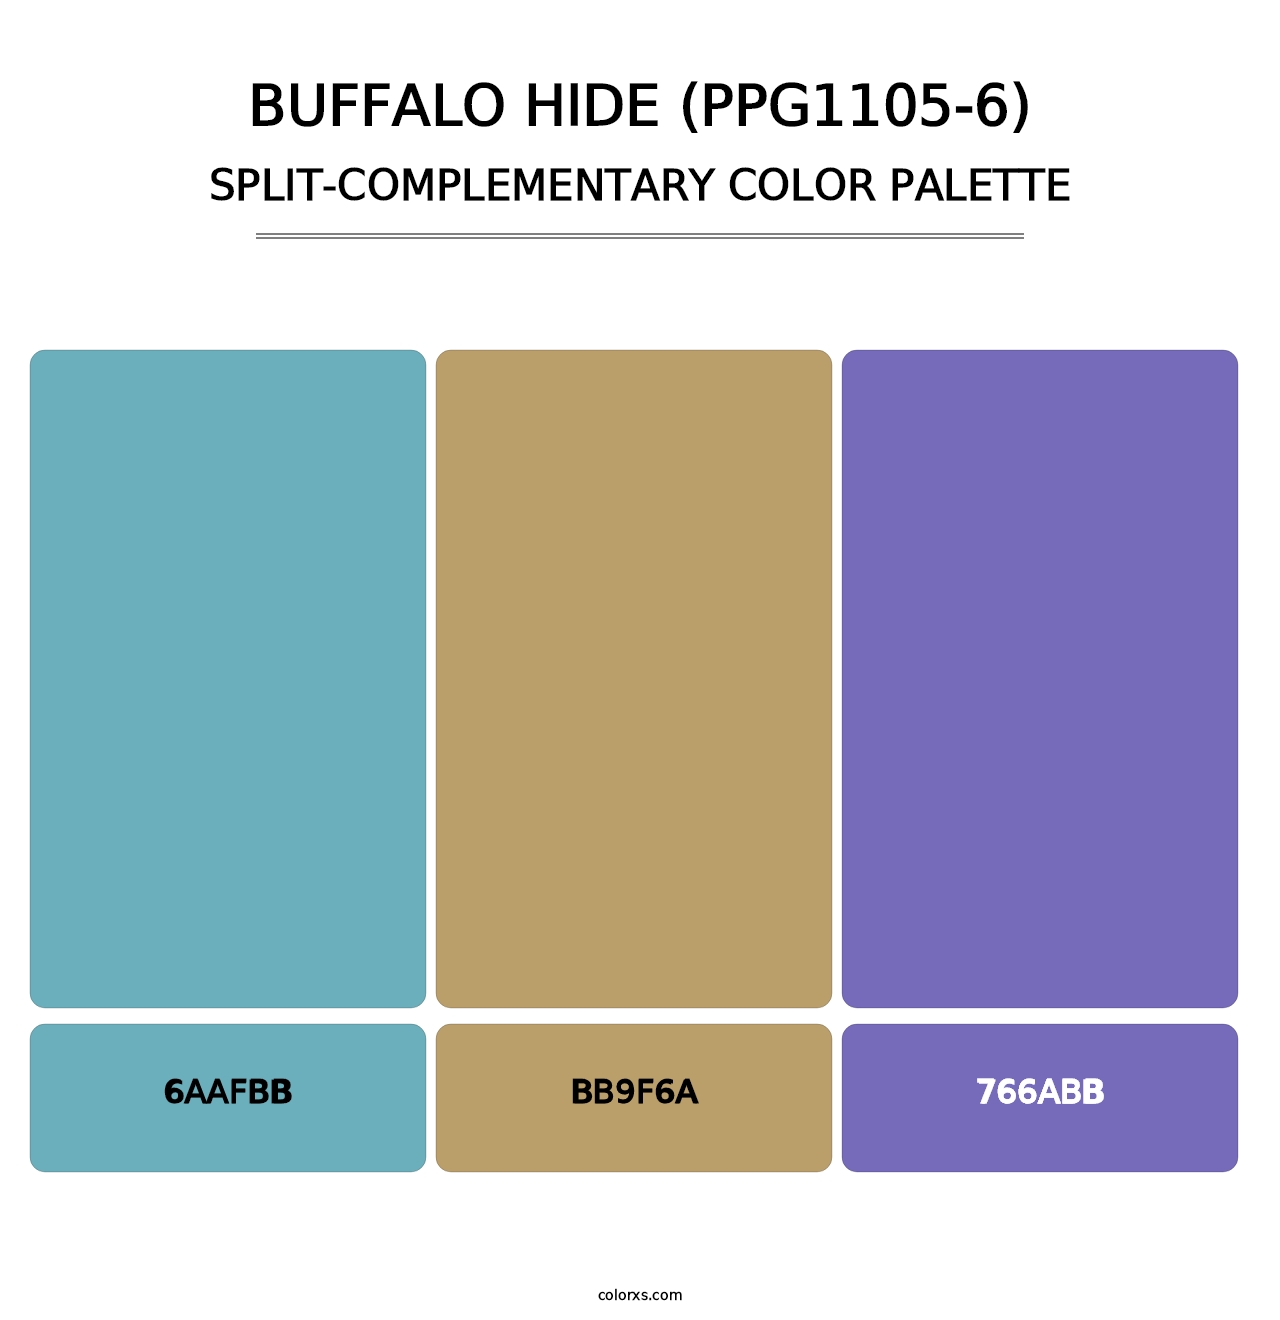 Buffalo Hide (PPG1105-6) - Split-Complementary Color Palette